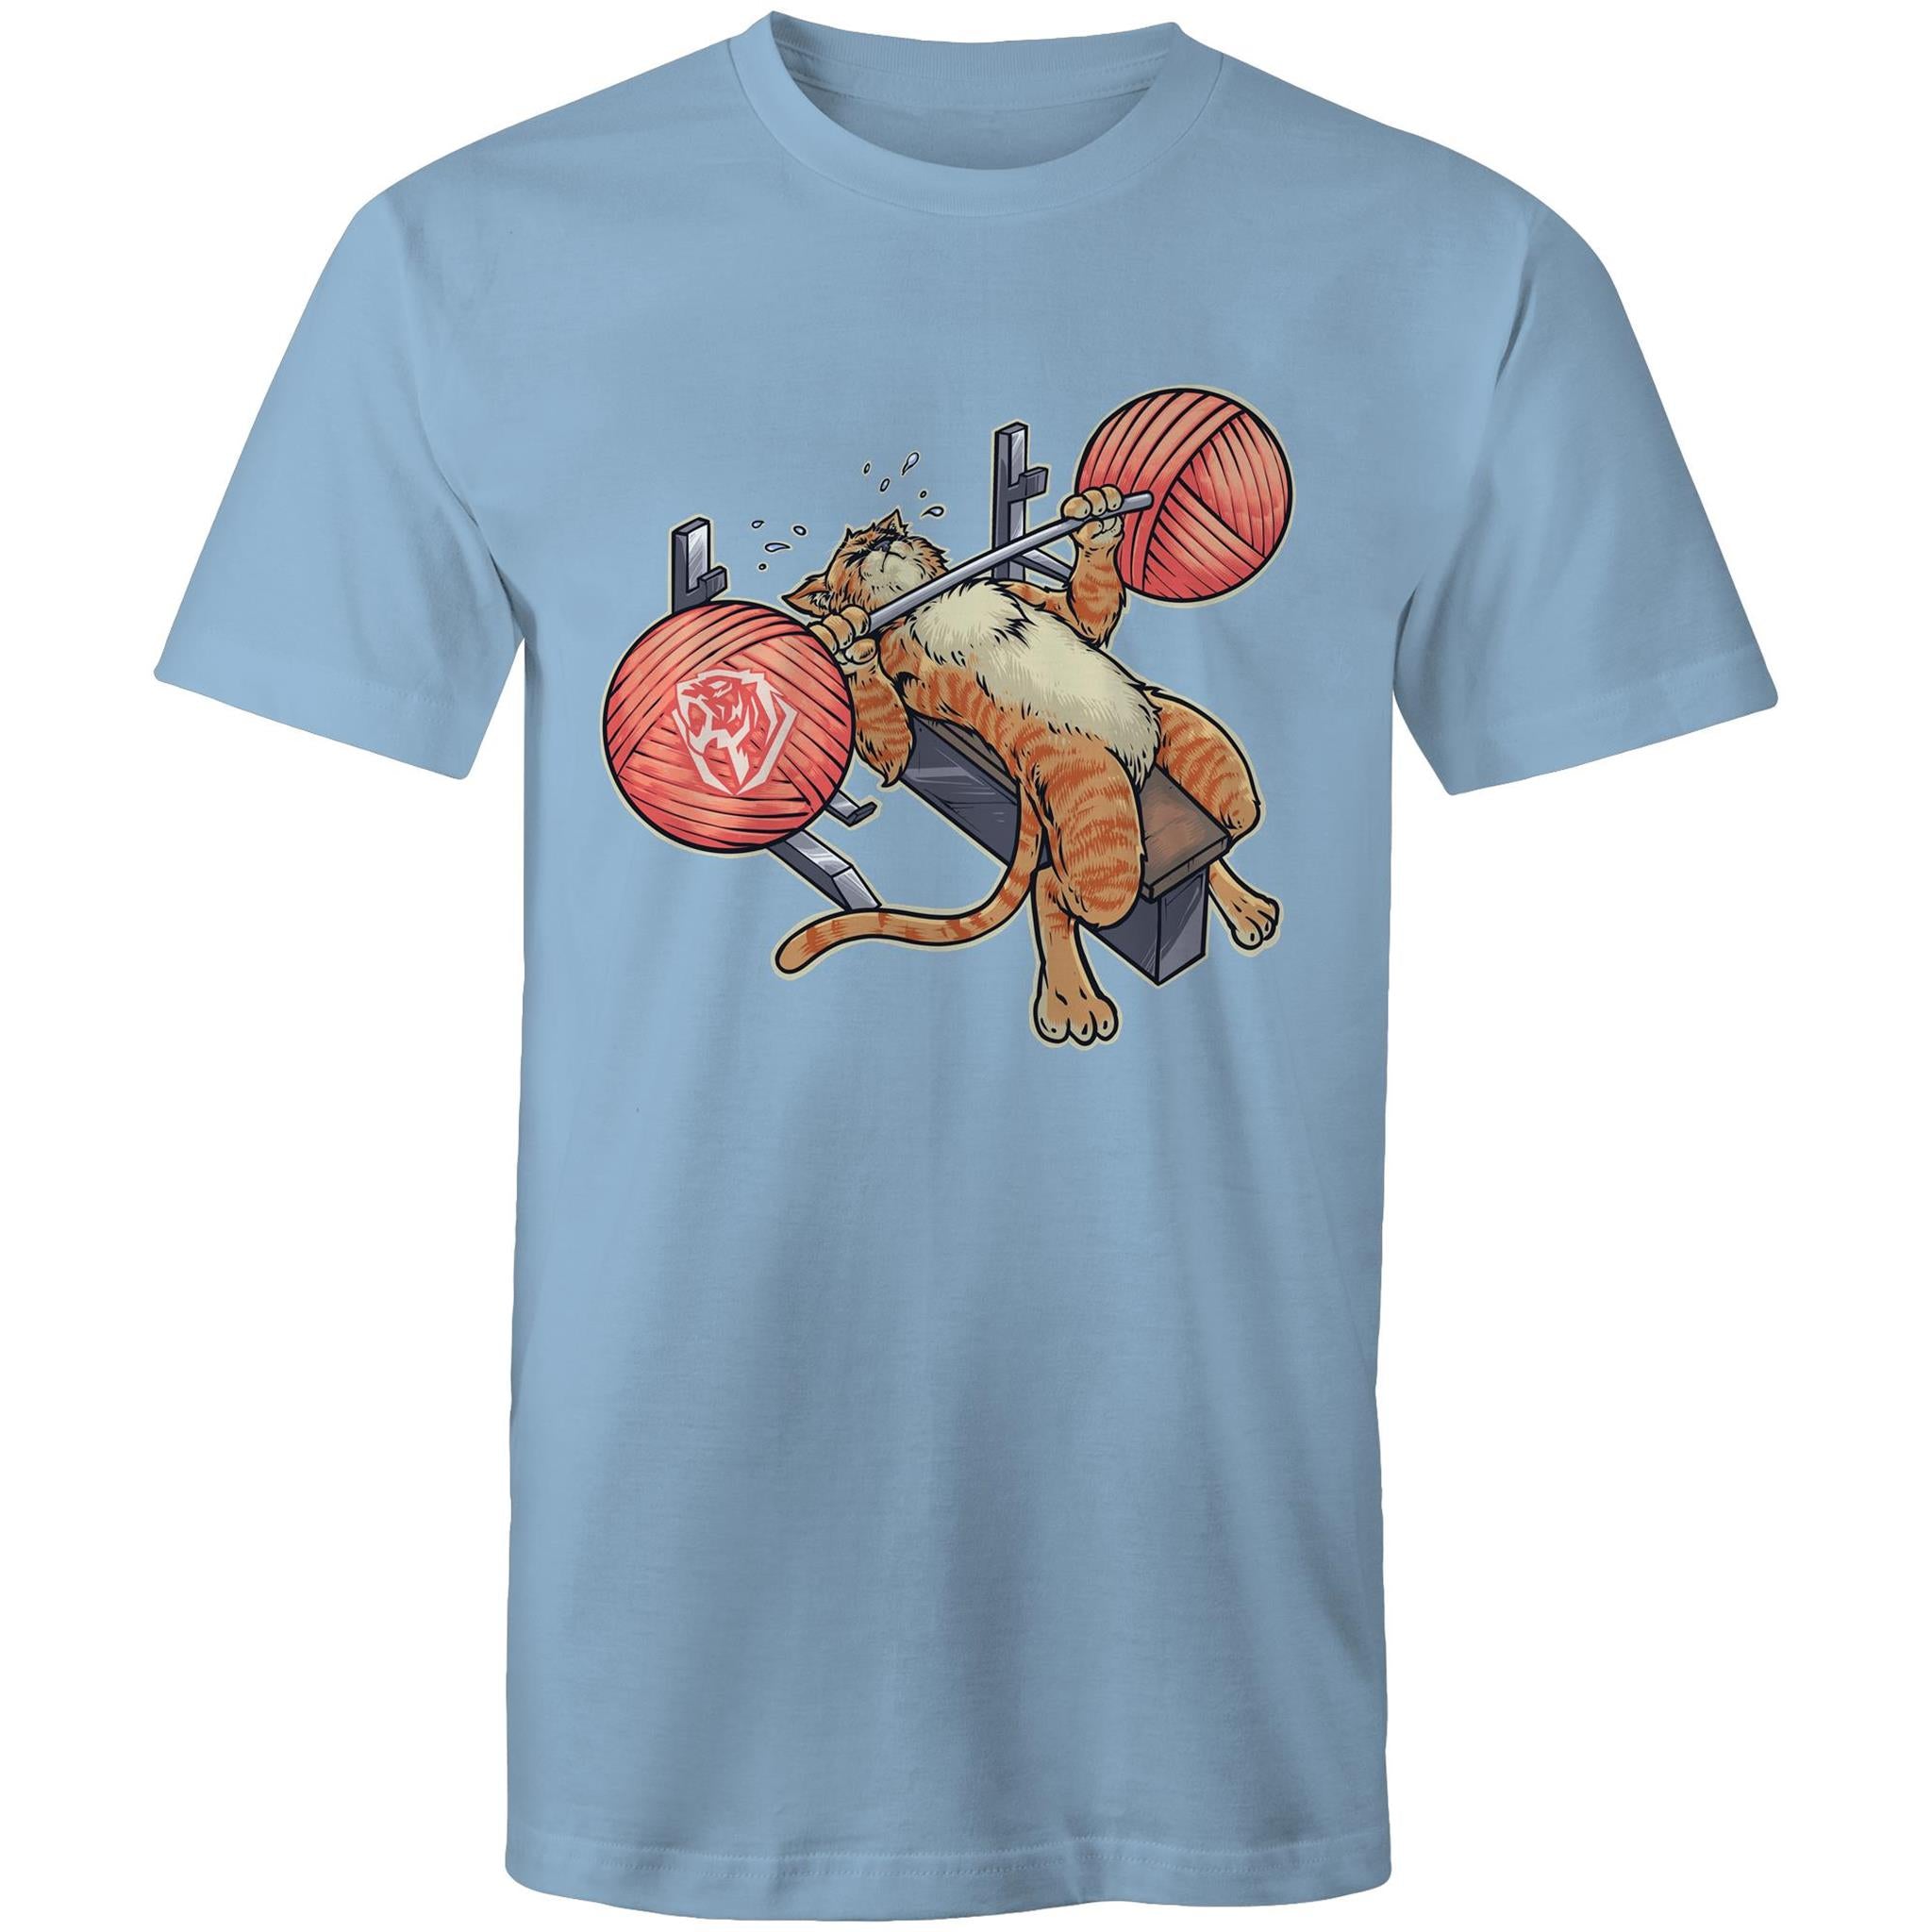 Benchpressing Orange Cat T-shirt (AU)